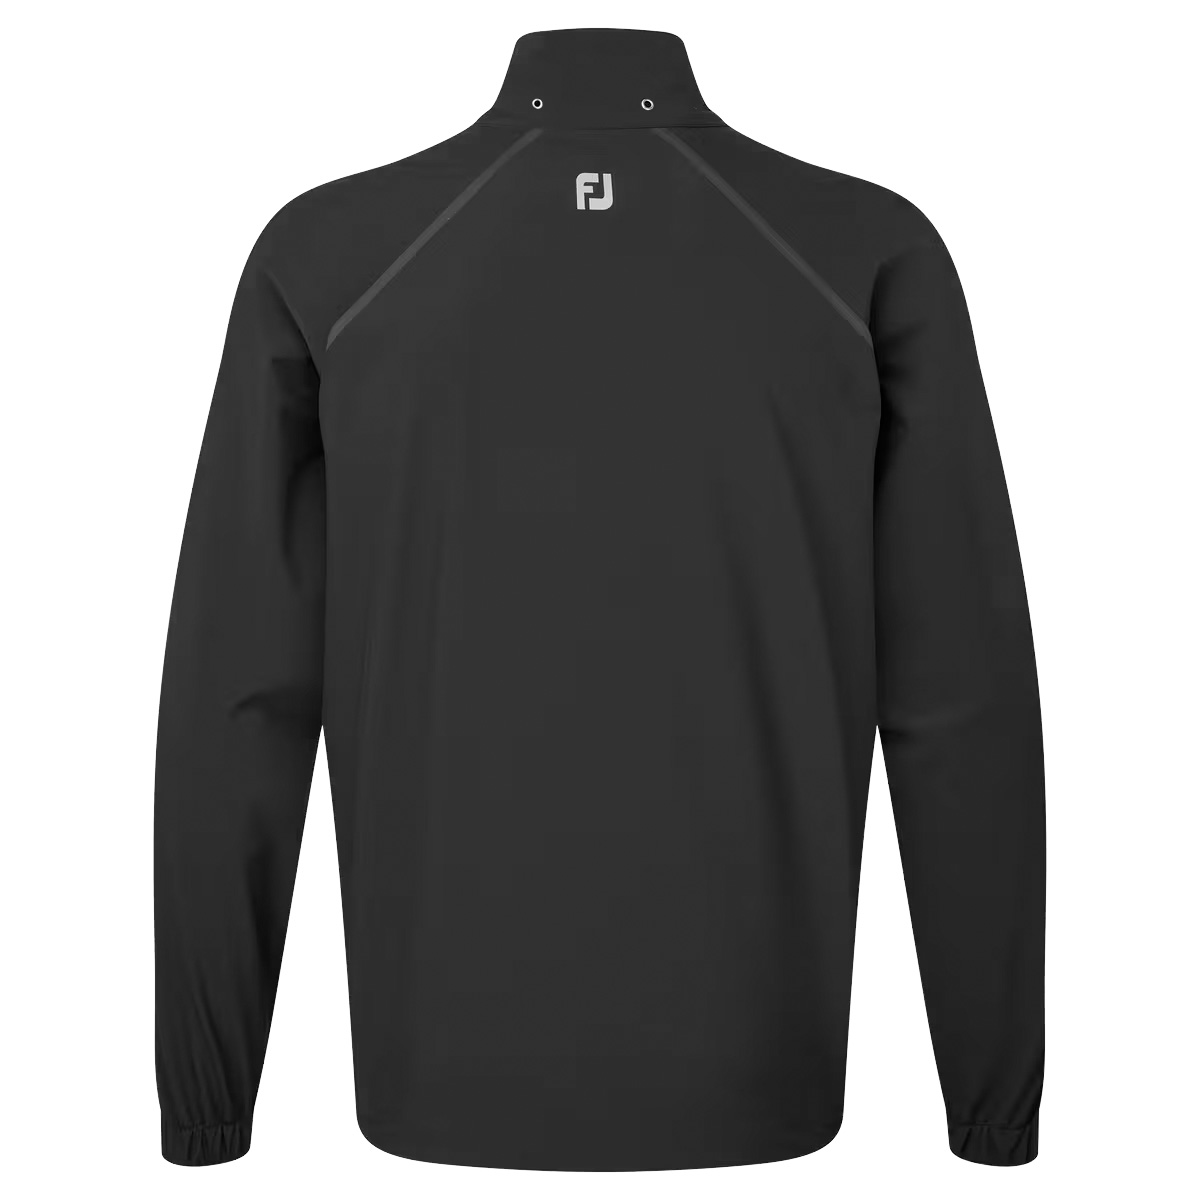 FootJoy Golf HydroTour Waterproof Jacket  - Black/Silver